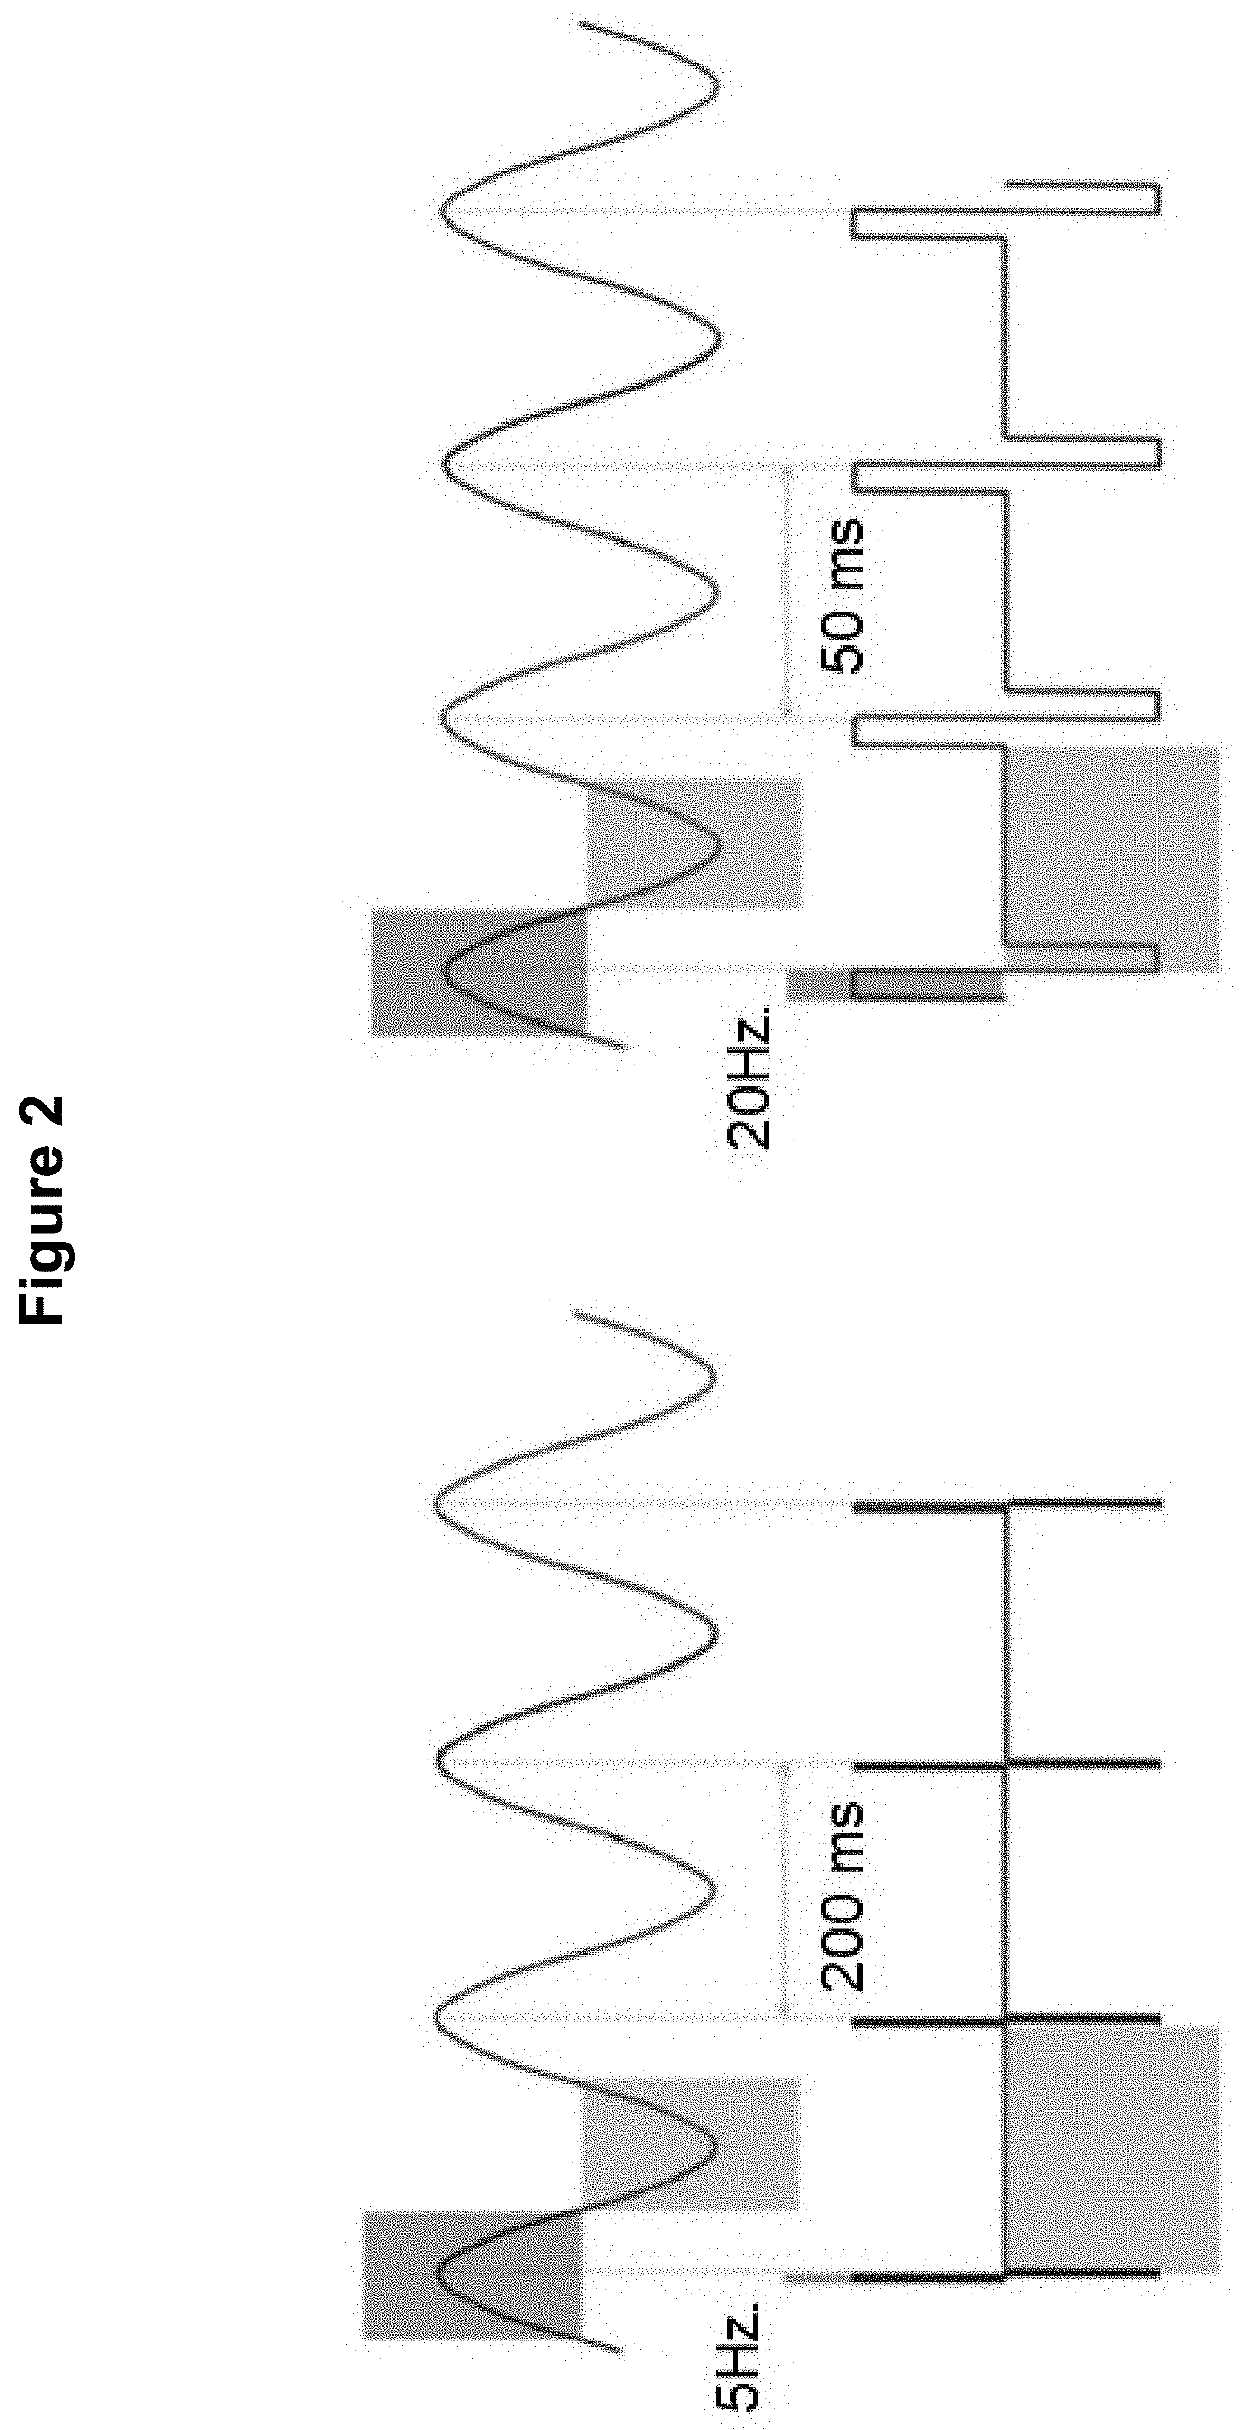 Method for the identification of sensory neuron subtypes in ex vivo preparations